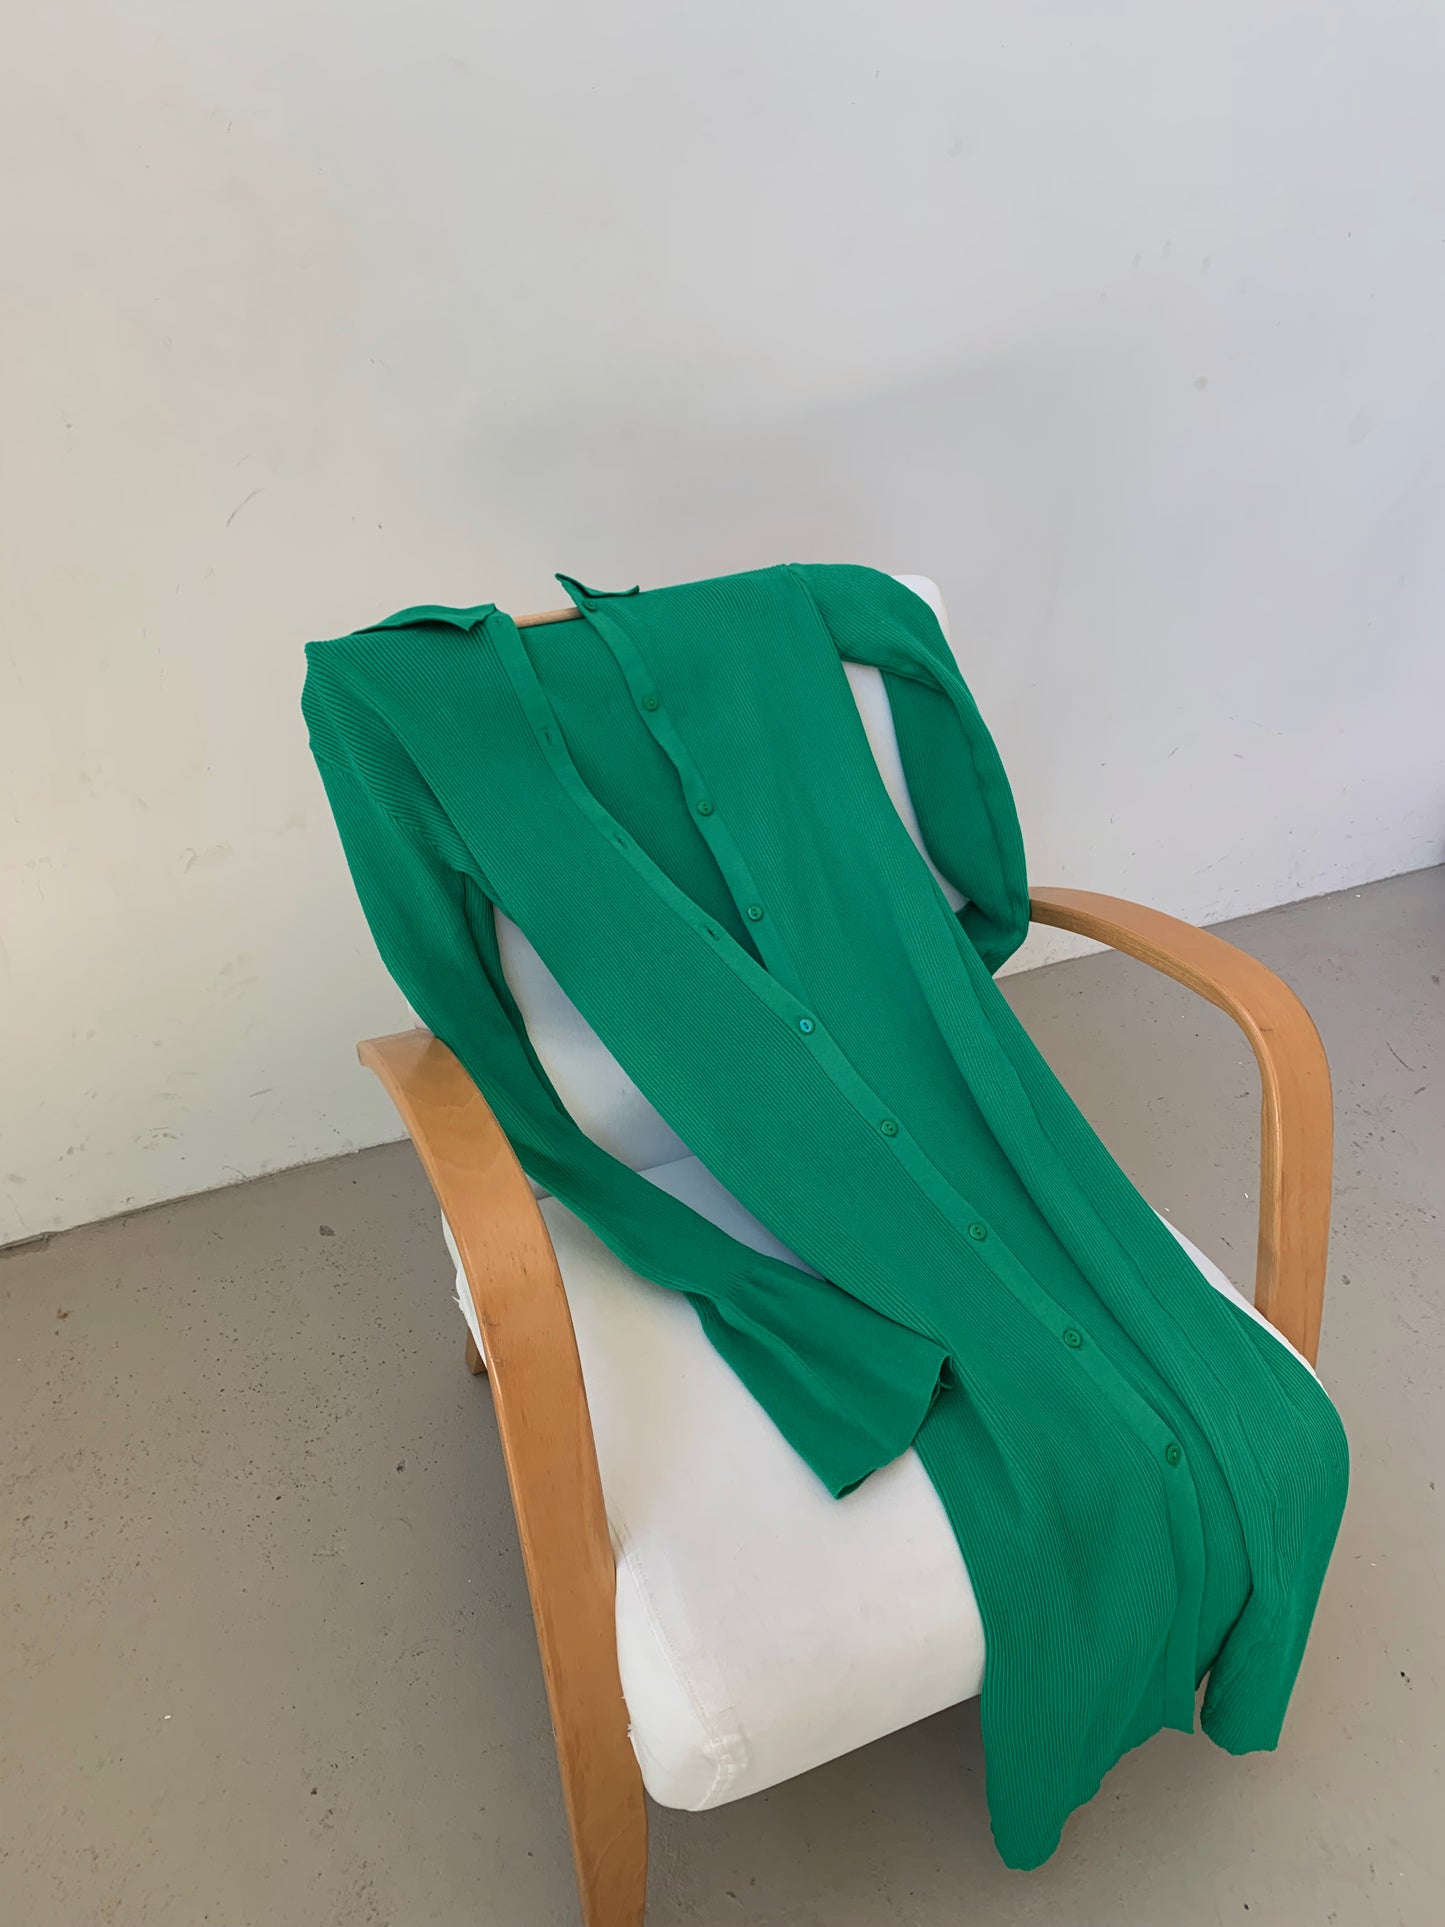 Green Rib Knitted Collared Midi Dress via Chouette Club